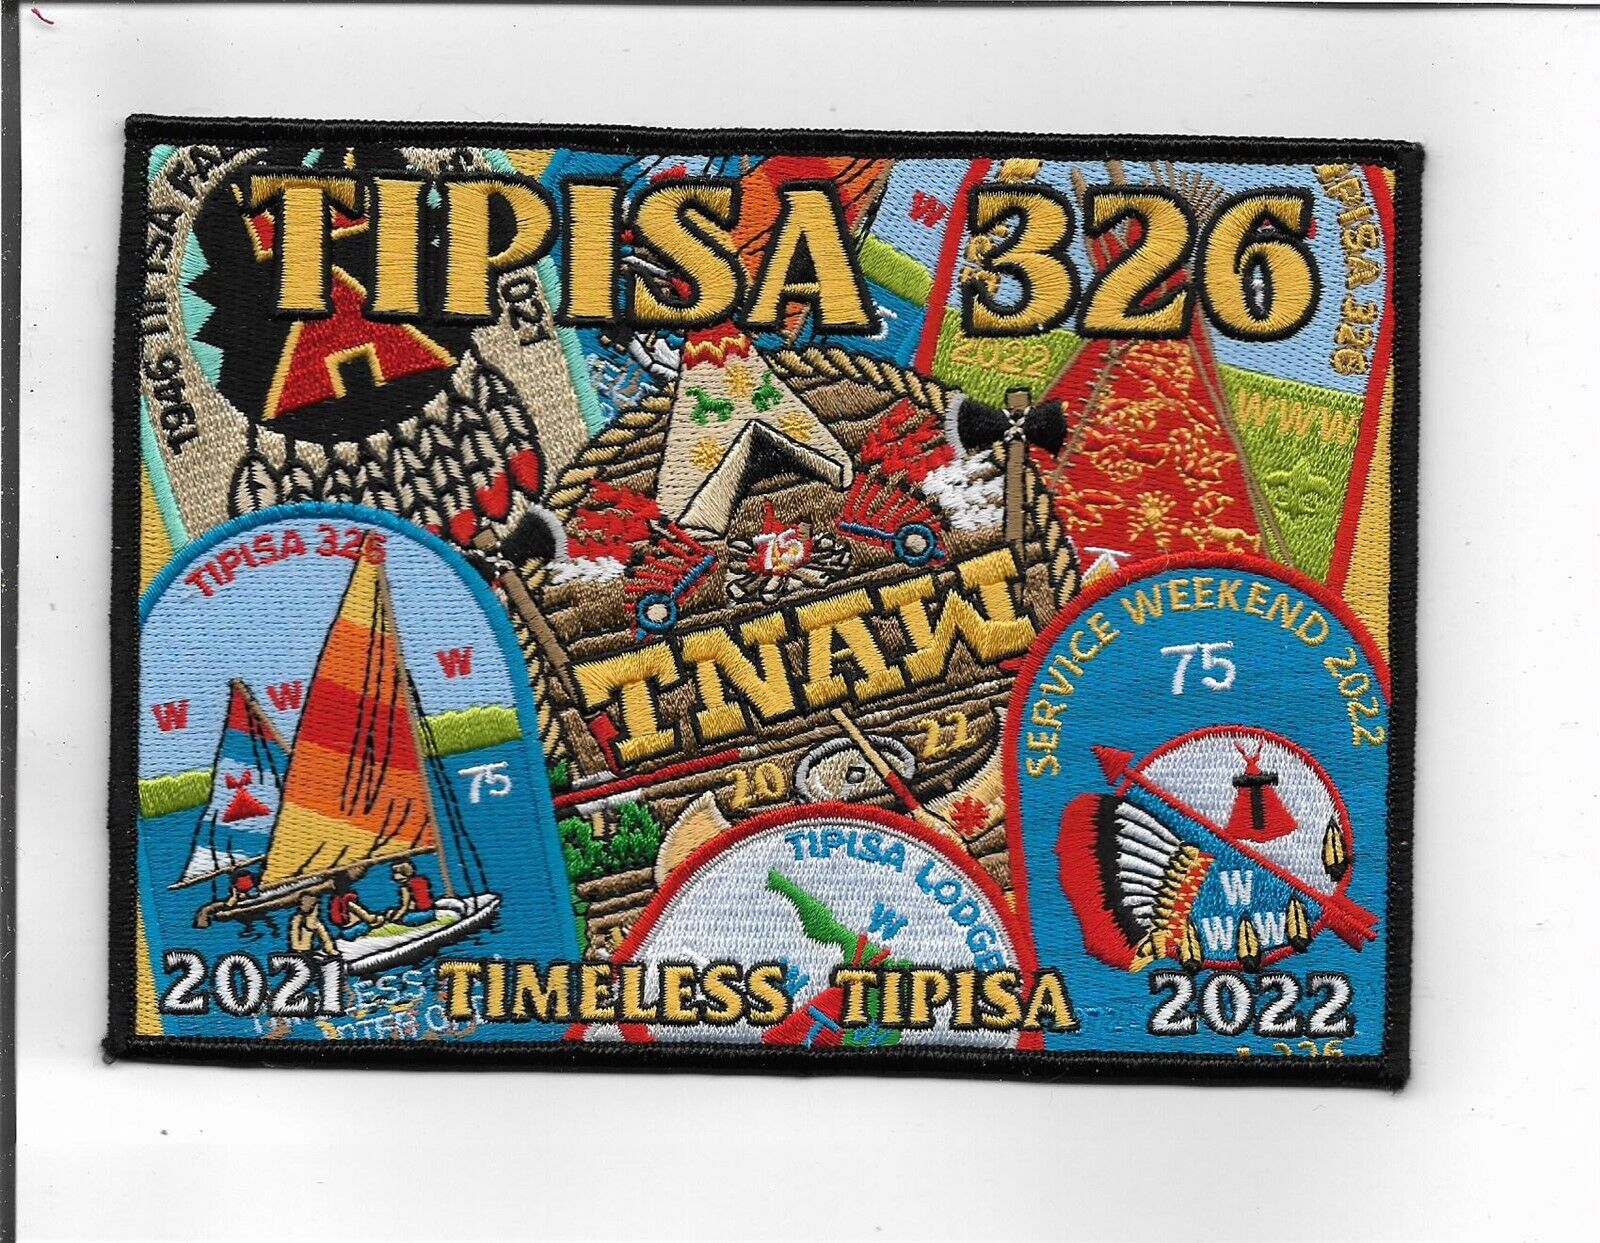 2021-2022 Lodge 326 Tipisa Timeless Tipisa Jacket OA patch